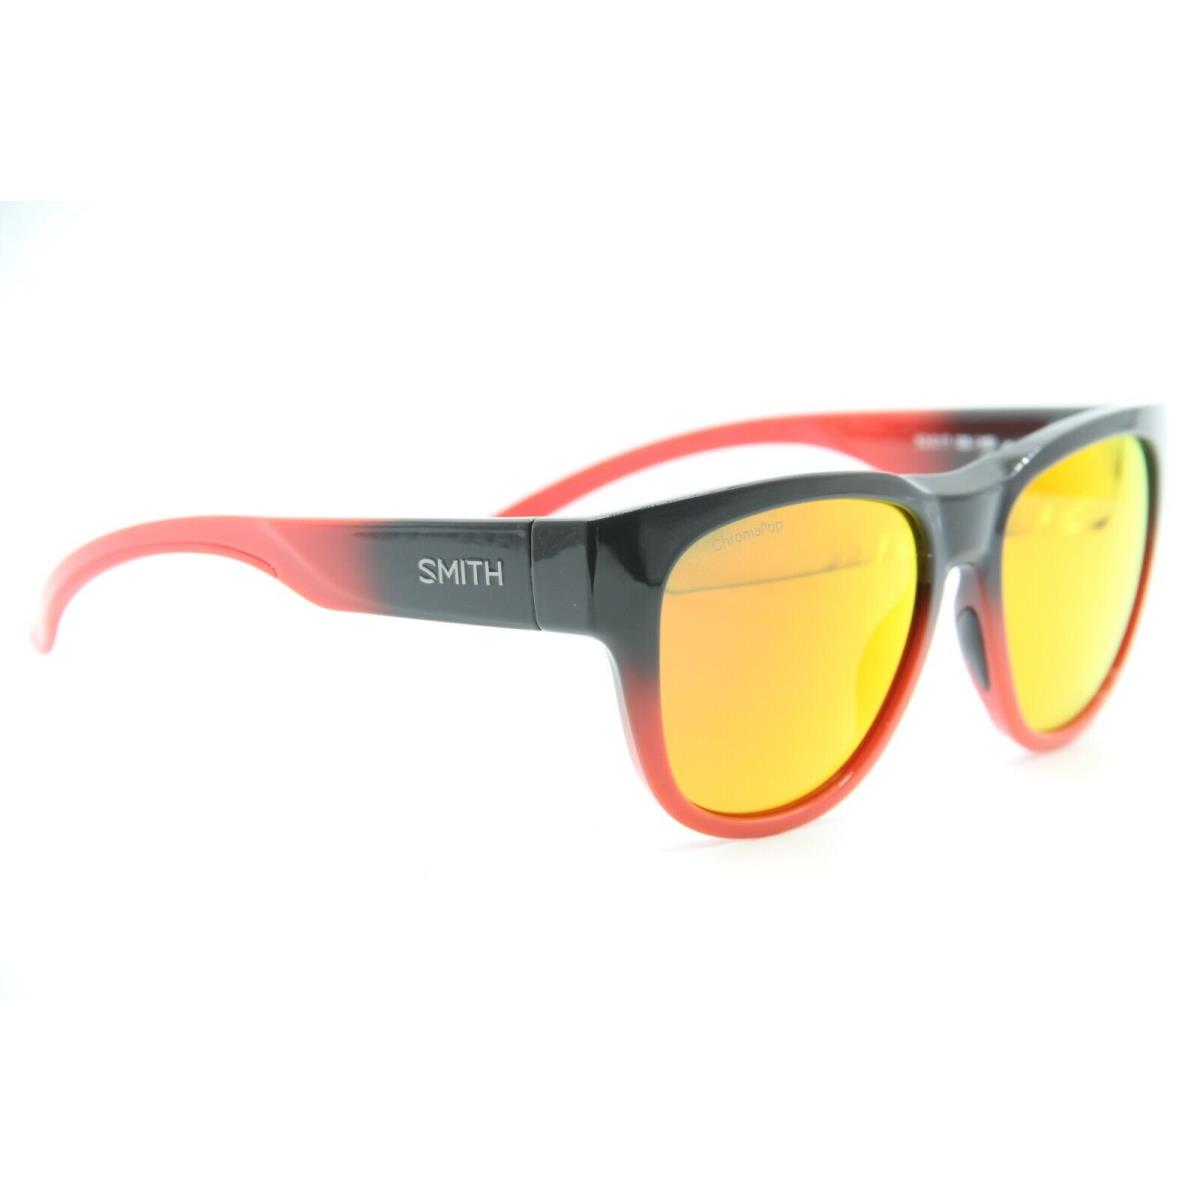 Smith Optics Rounder Sunglasses